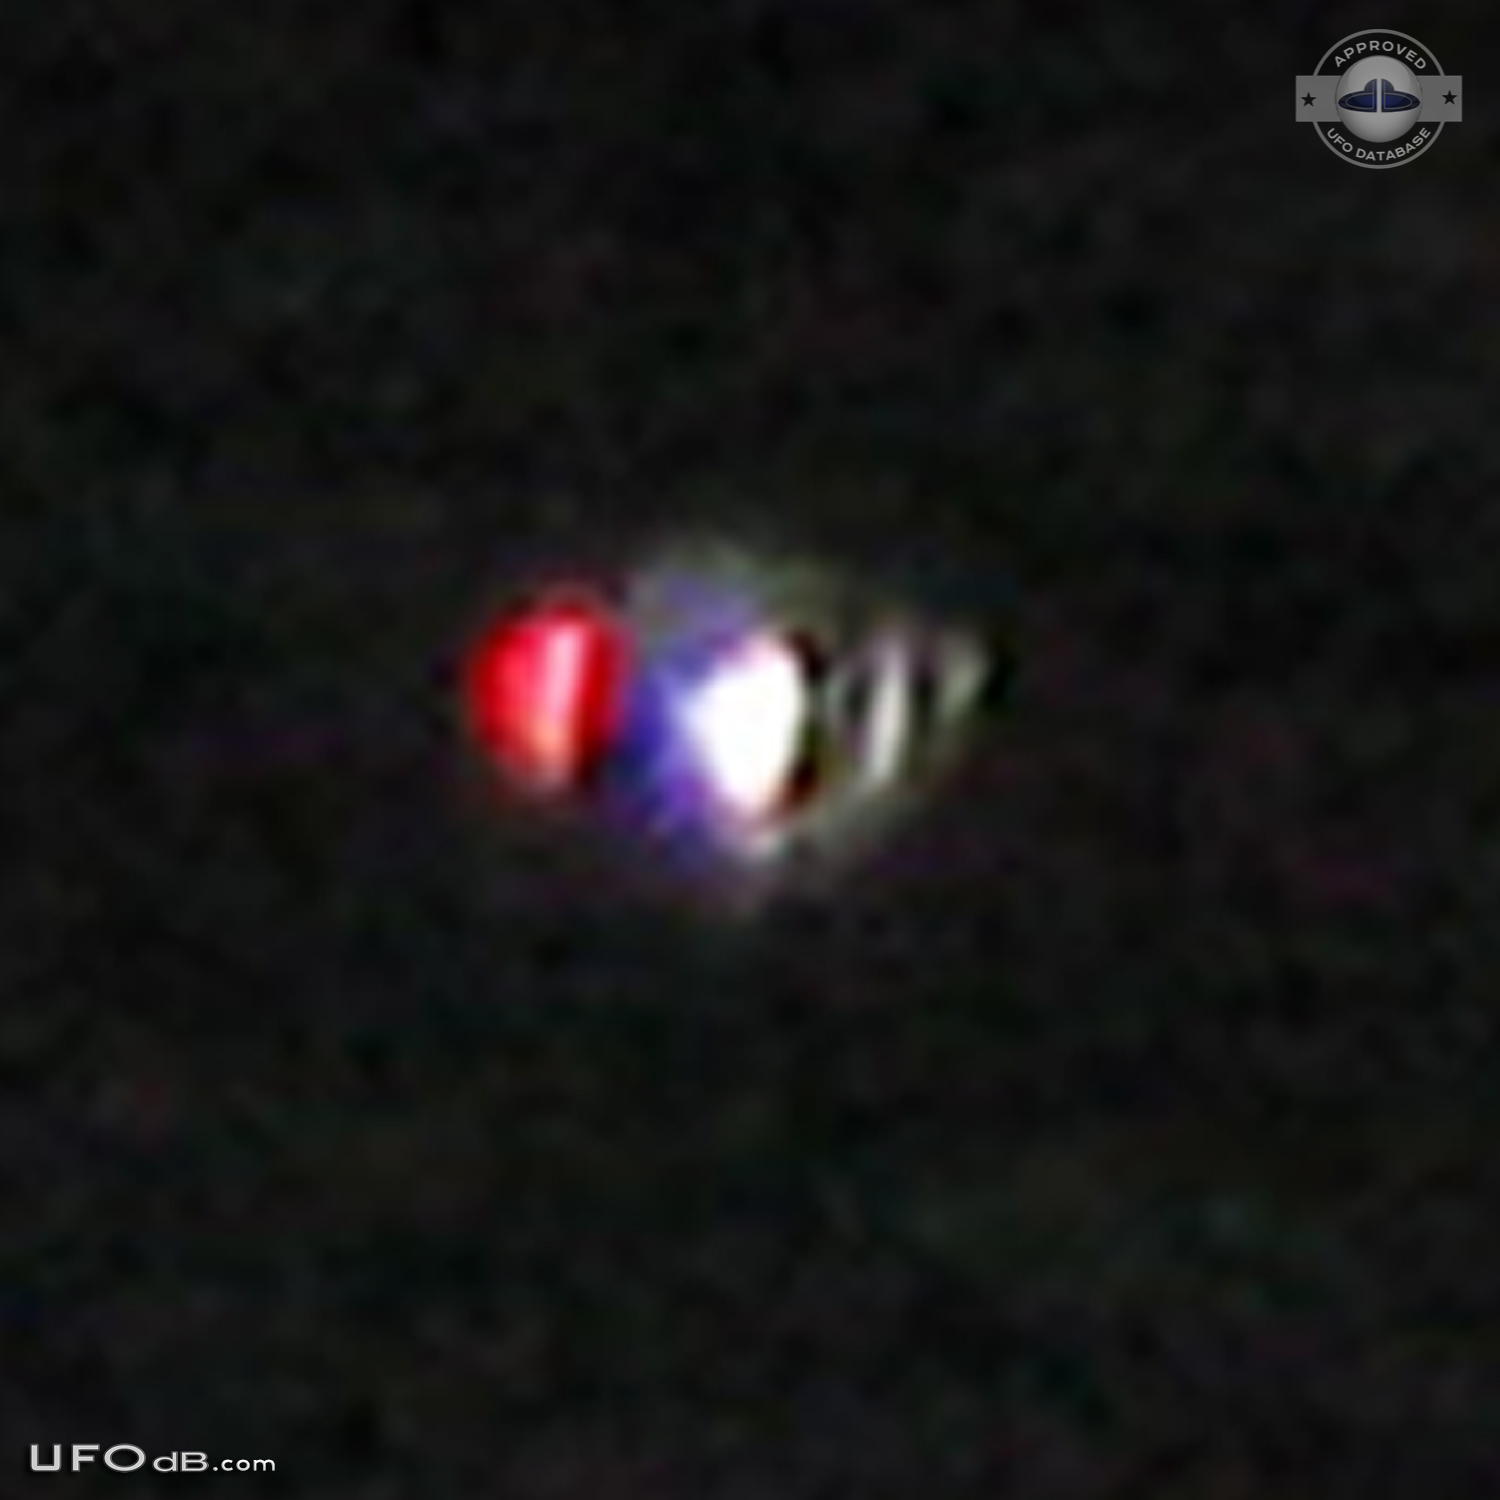 Probe UFO near the snow touching it - Kansas City, Missouri - 2012 UFO Picture #415-4